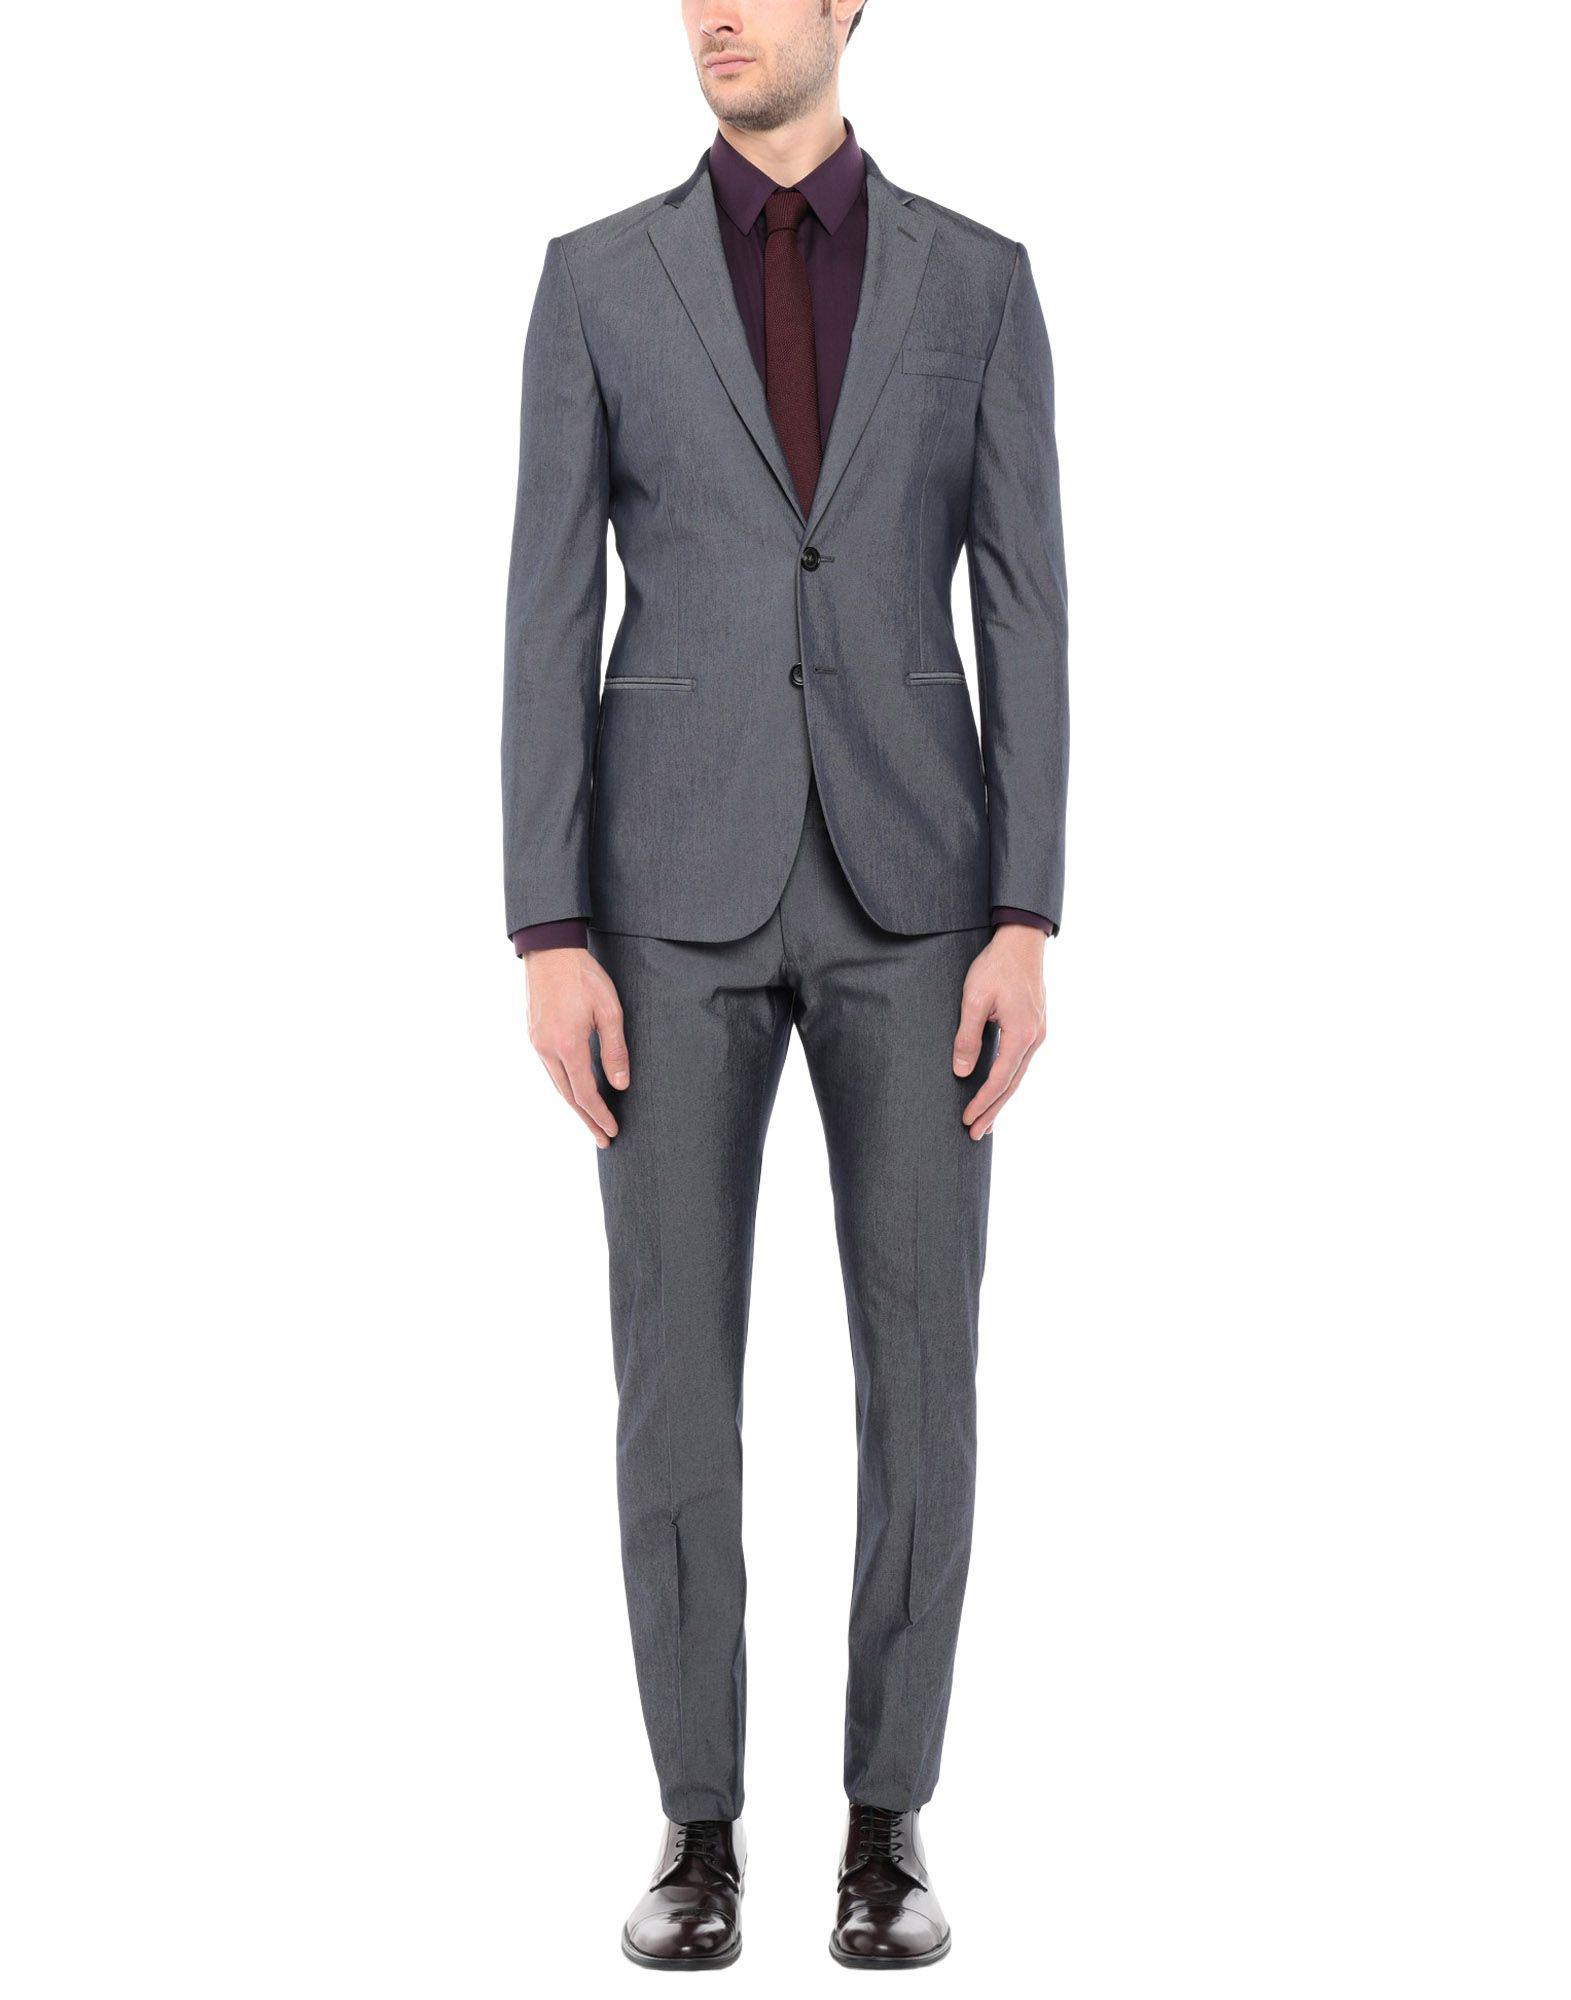 Tonello Cotton Suit in Lead (Gray) for Men - Lyst